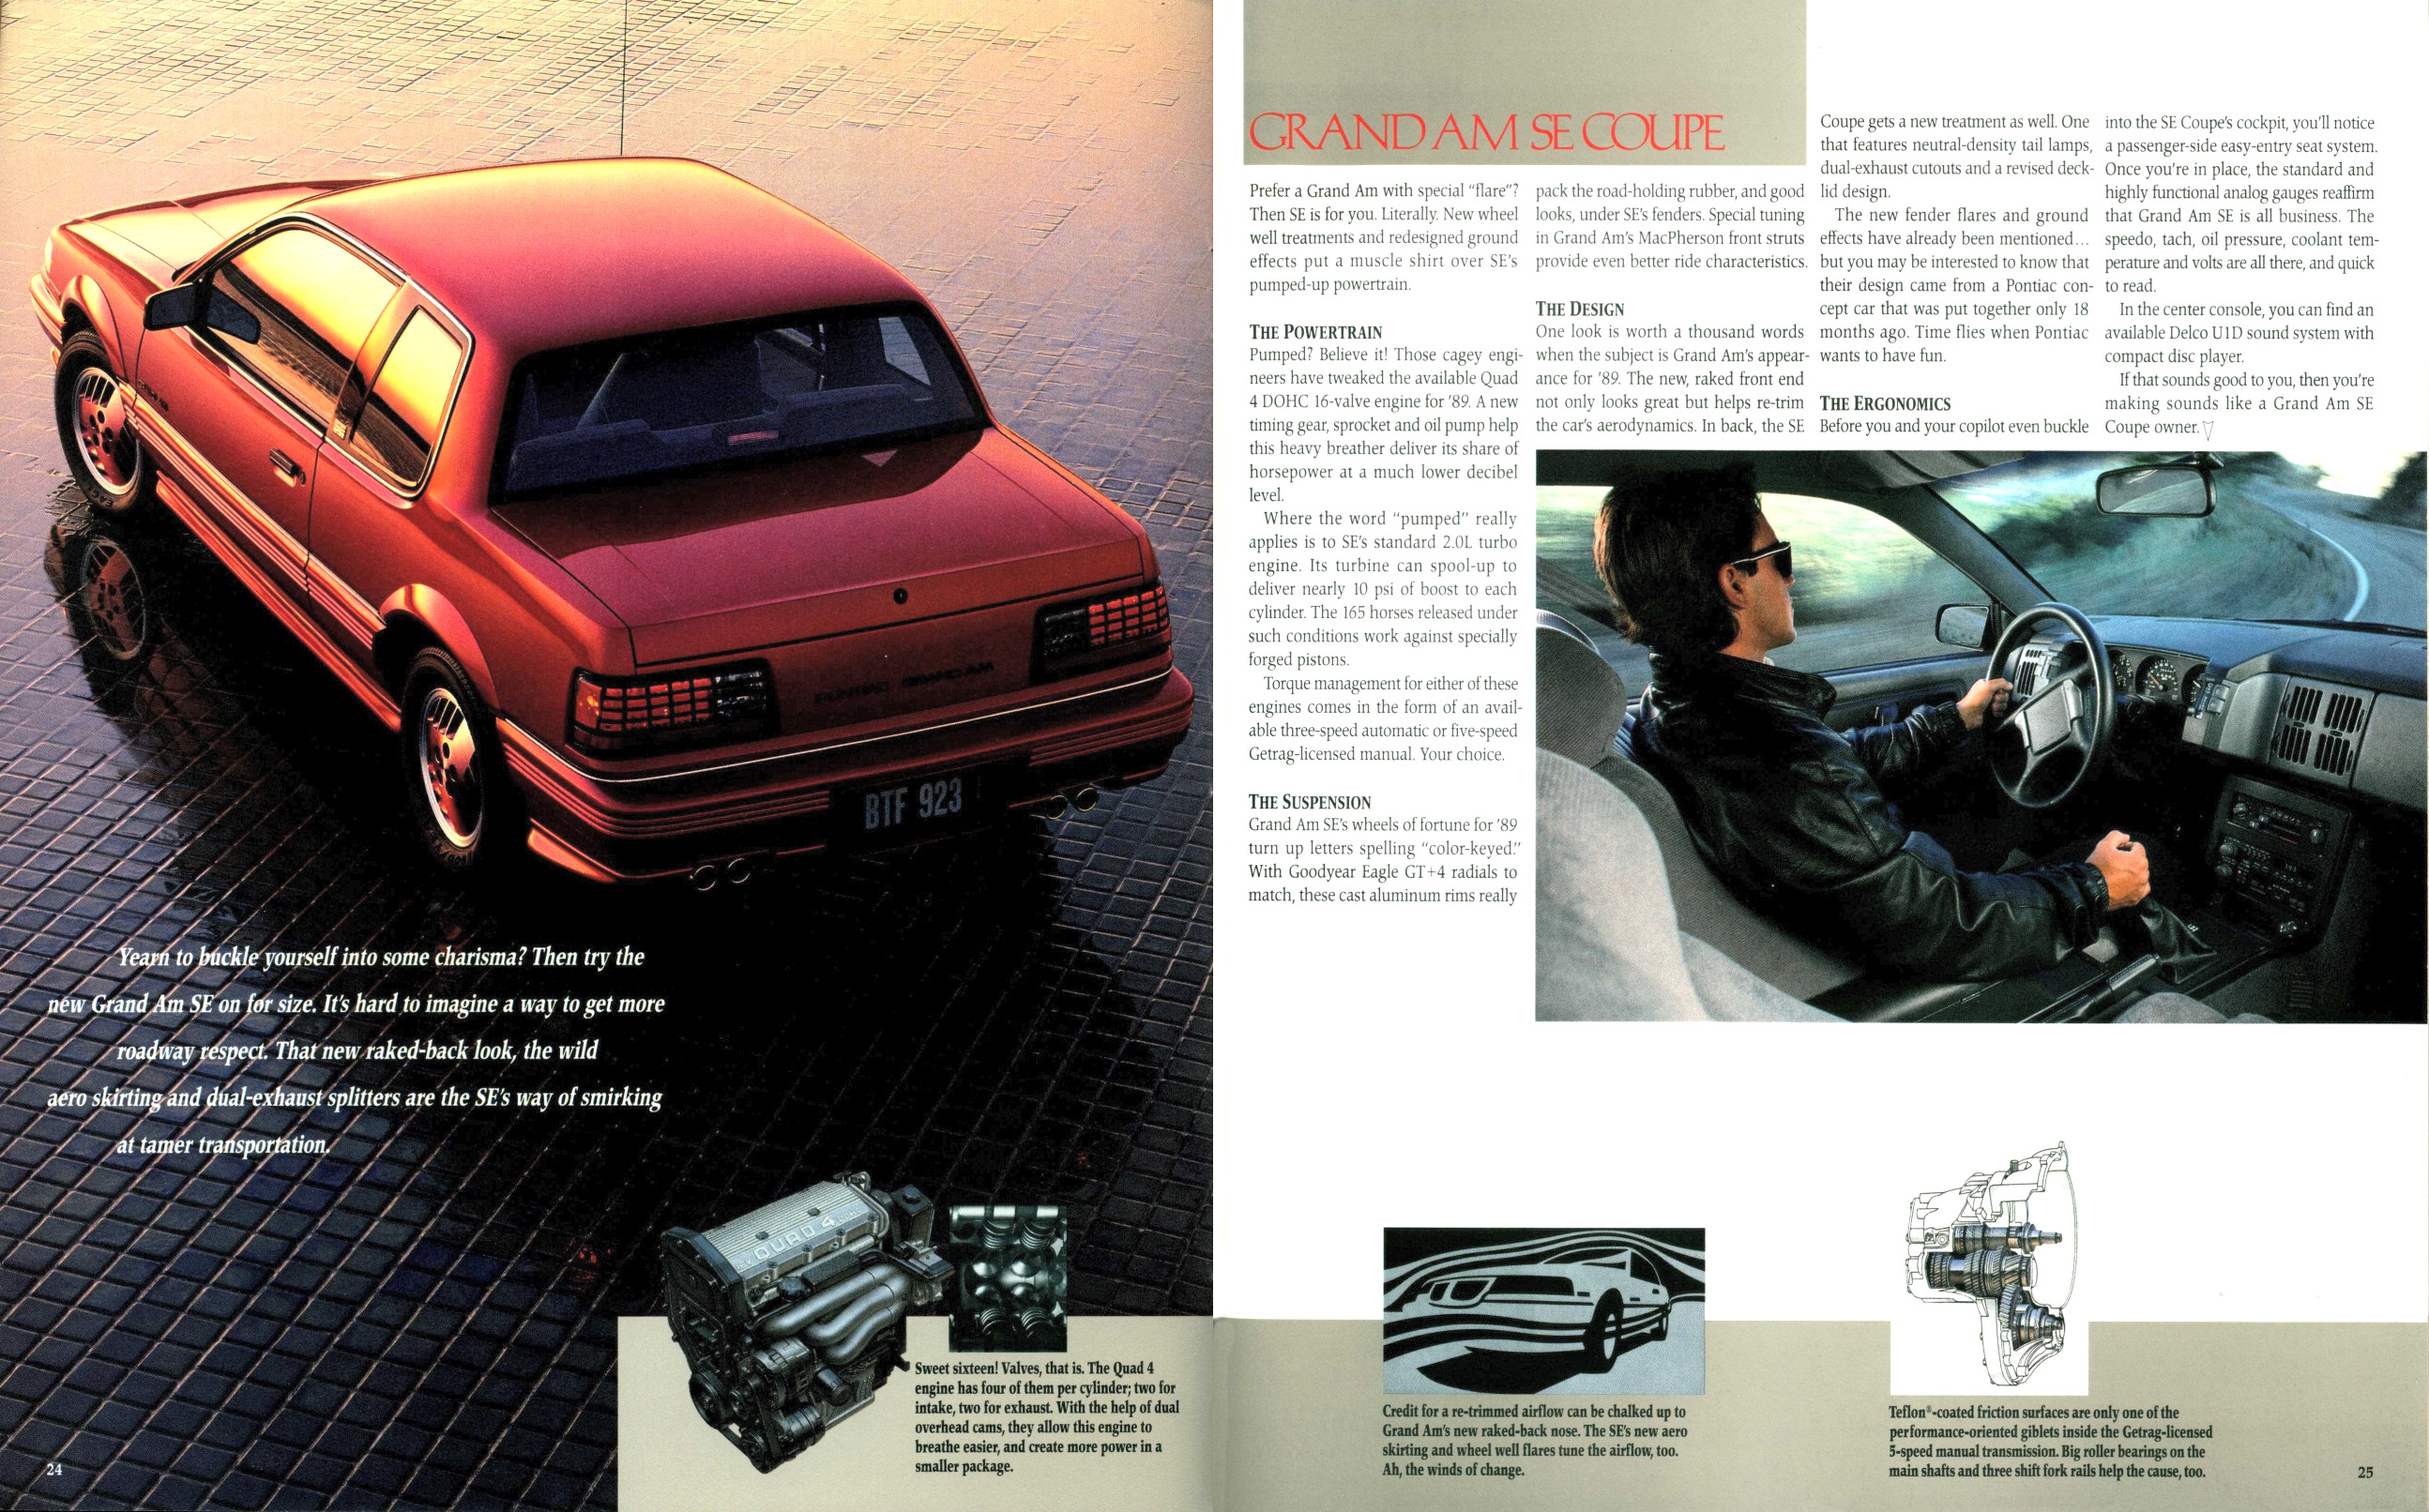 1989_Pontiac_Full_Line_Prestige-24-25